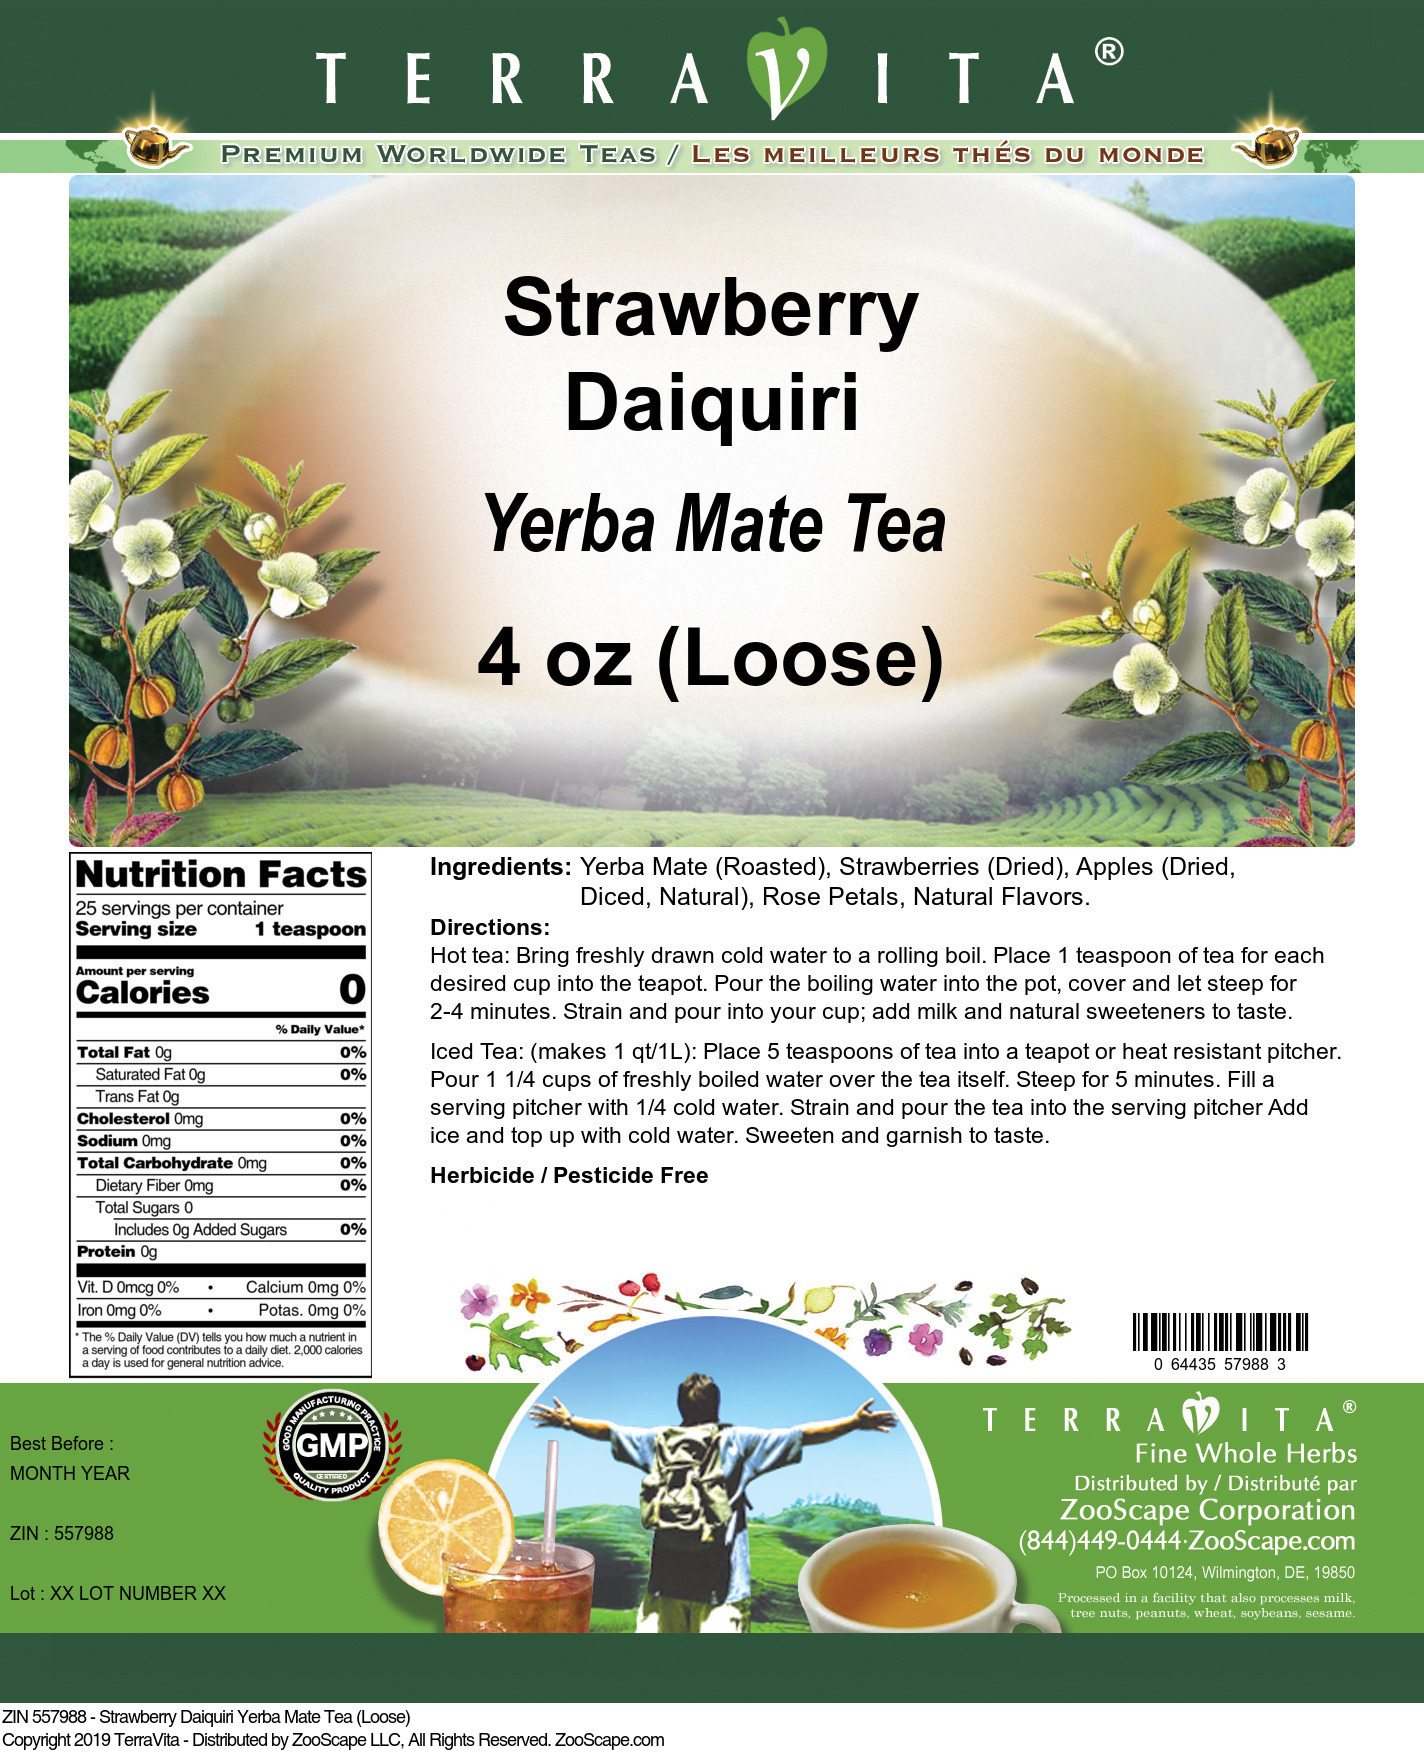 Strawberry Daiquiri Yerba Mate Tea (Loose) - Label